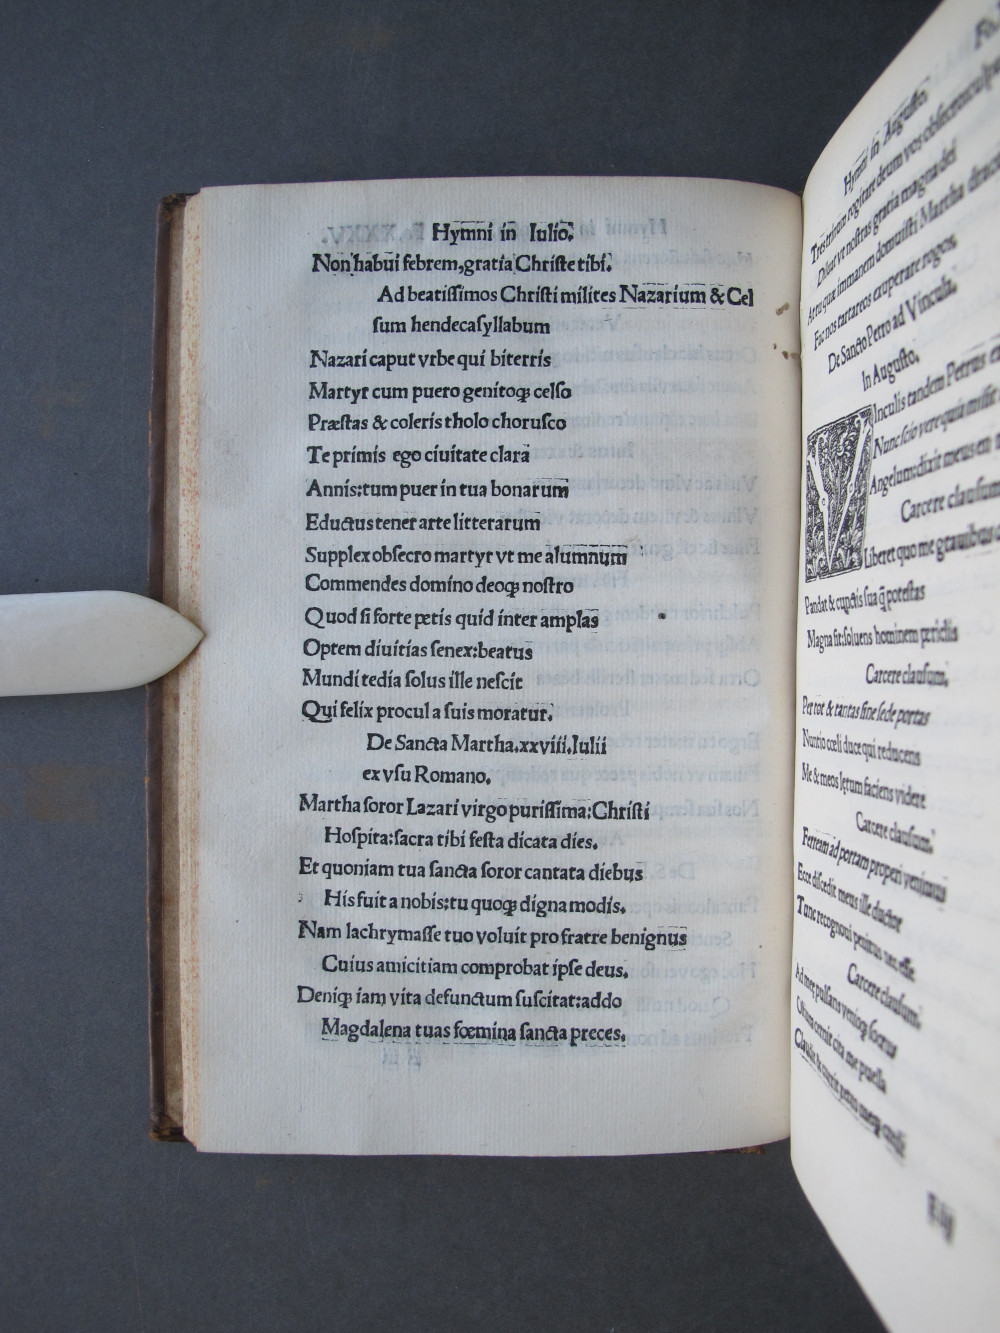 Folio 35 verso